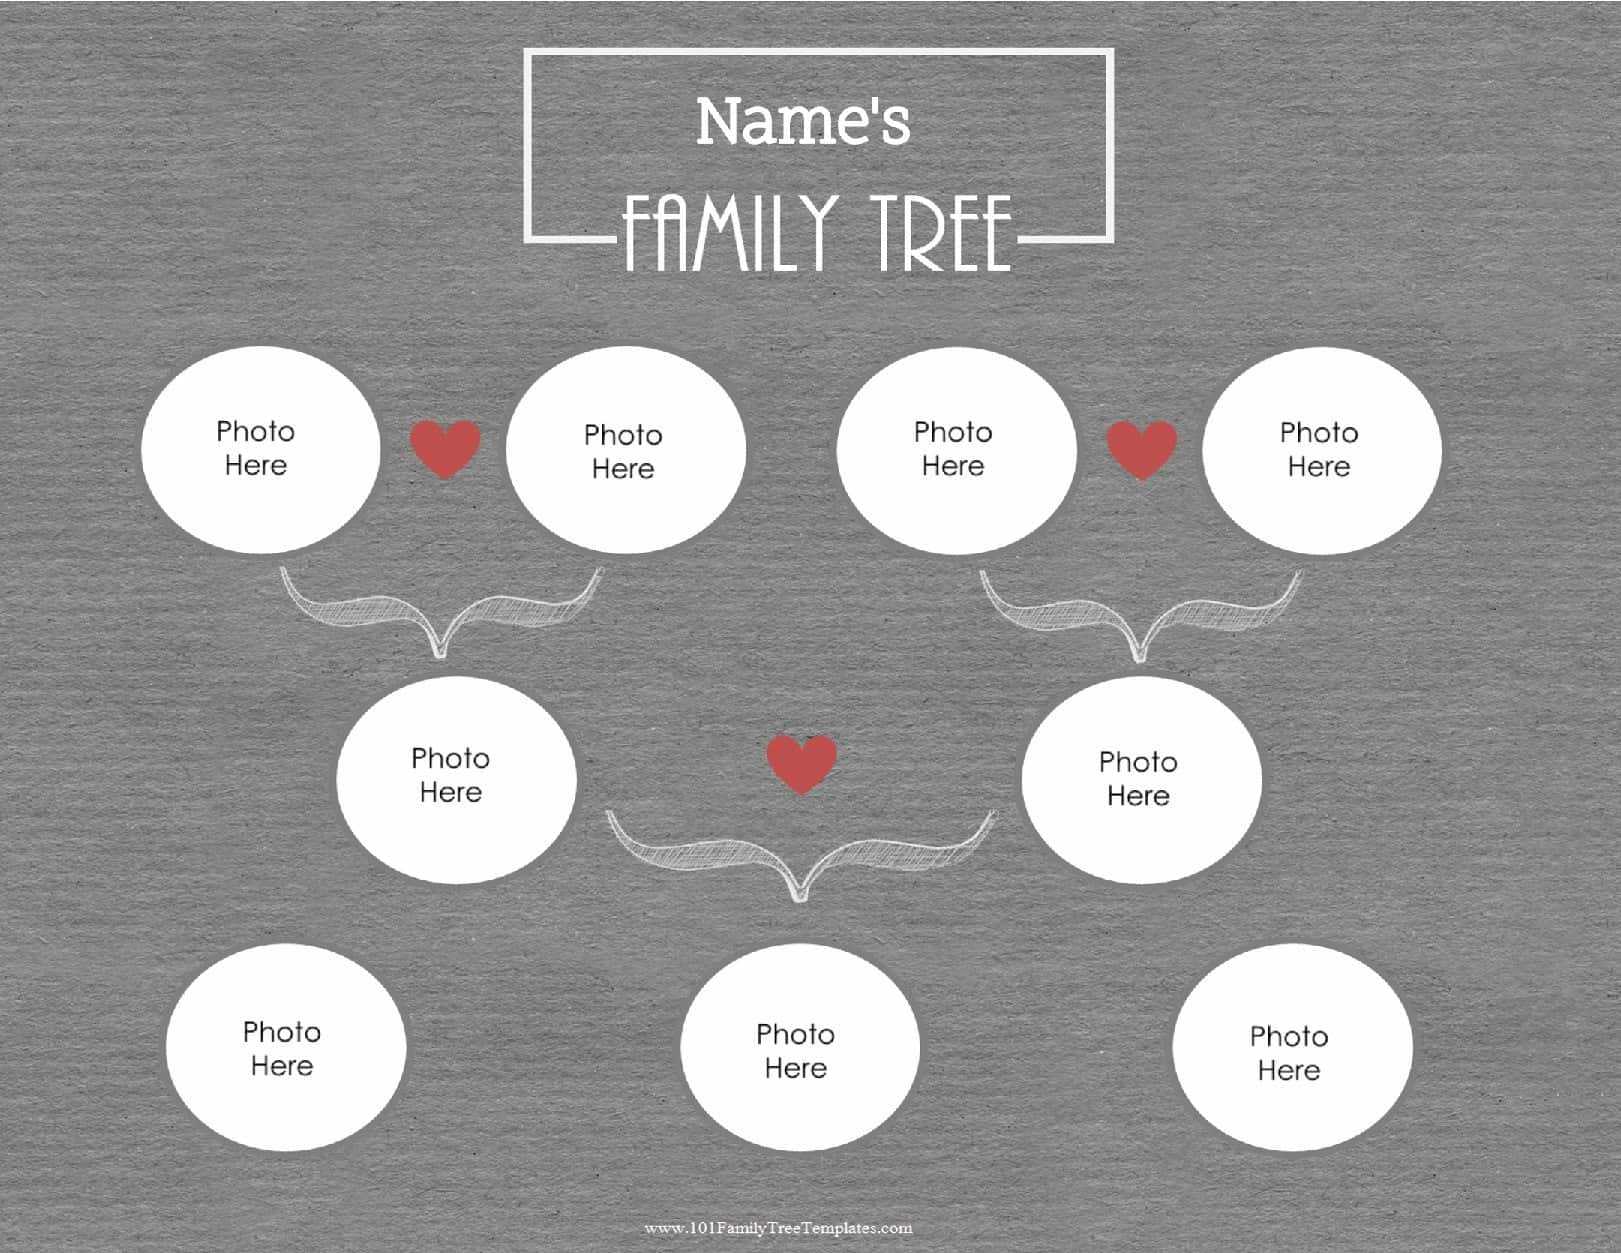 Free Family Tree Creator Regarding 3 Generation Family Tree Template Word